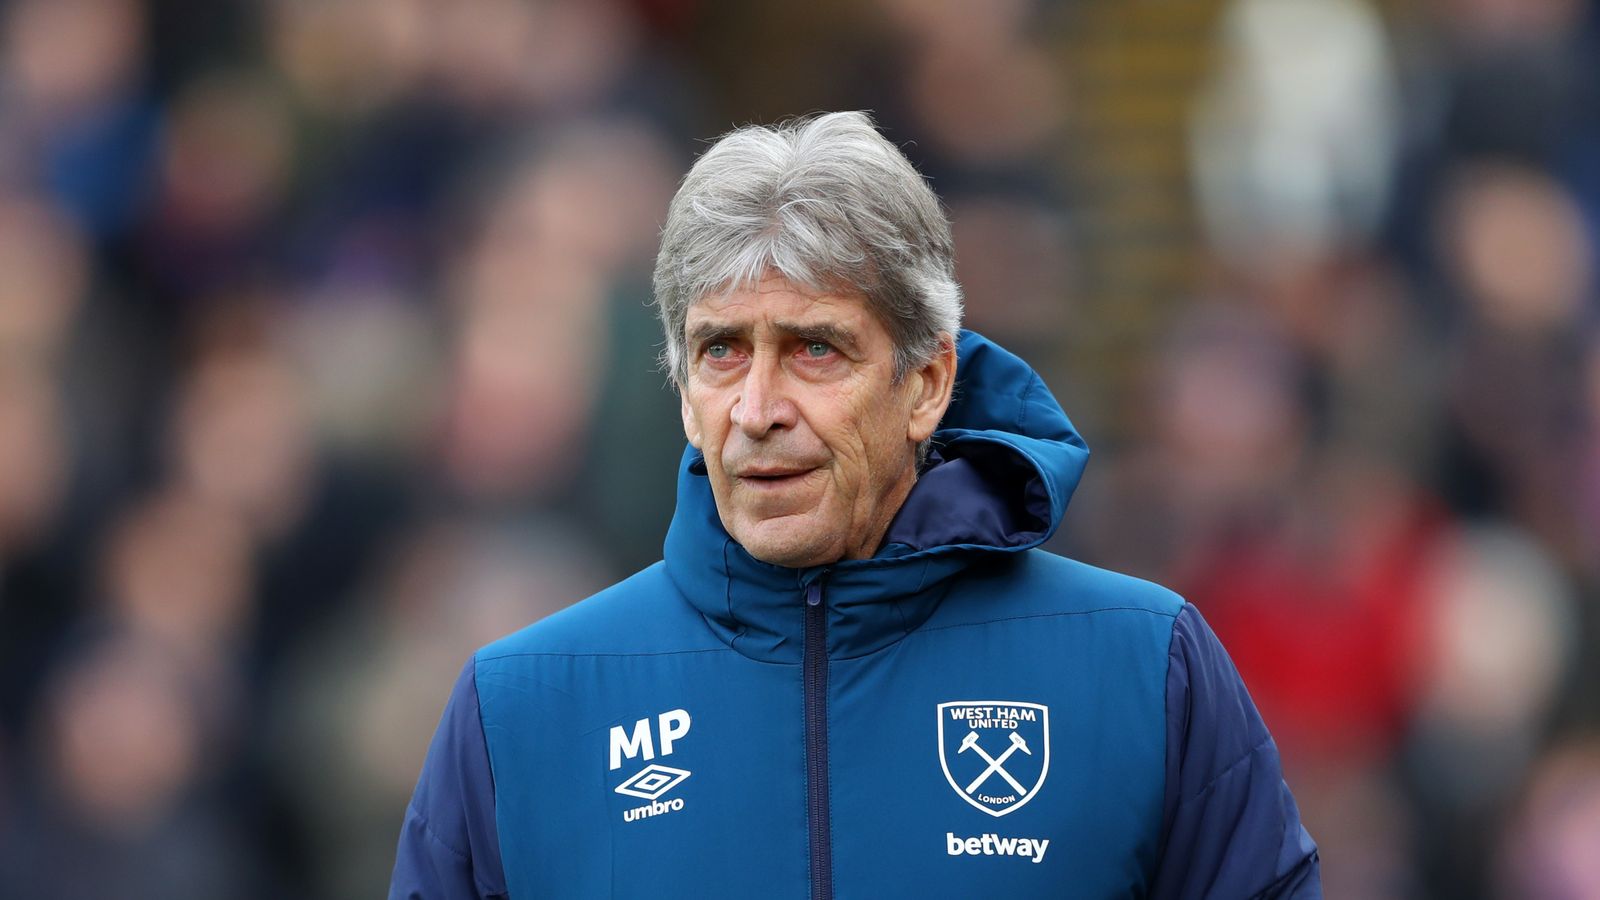 Officiel - Manuel Pellegrini quitte West Ham